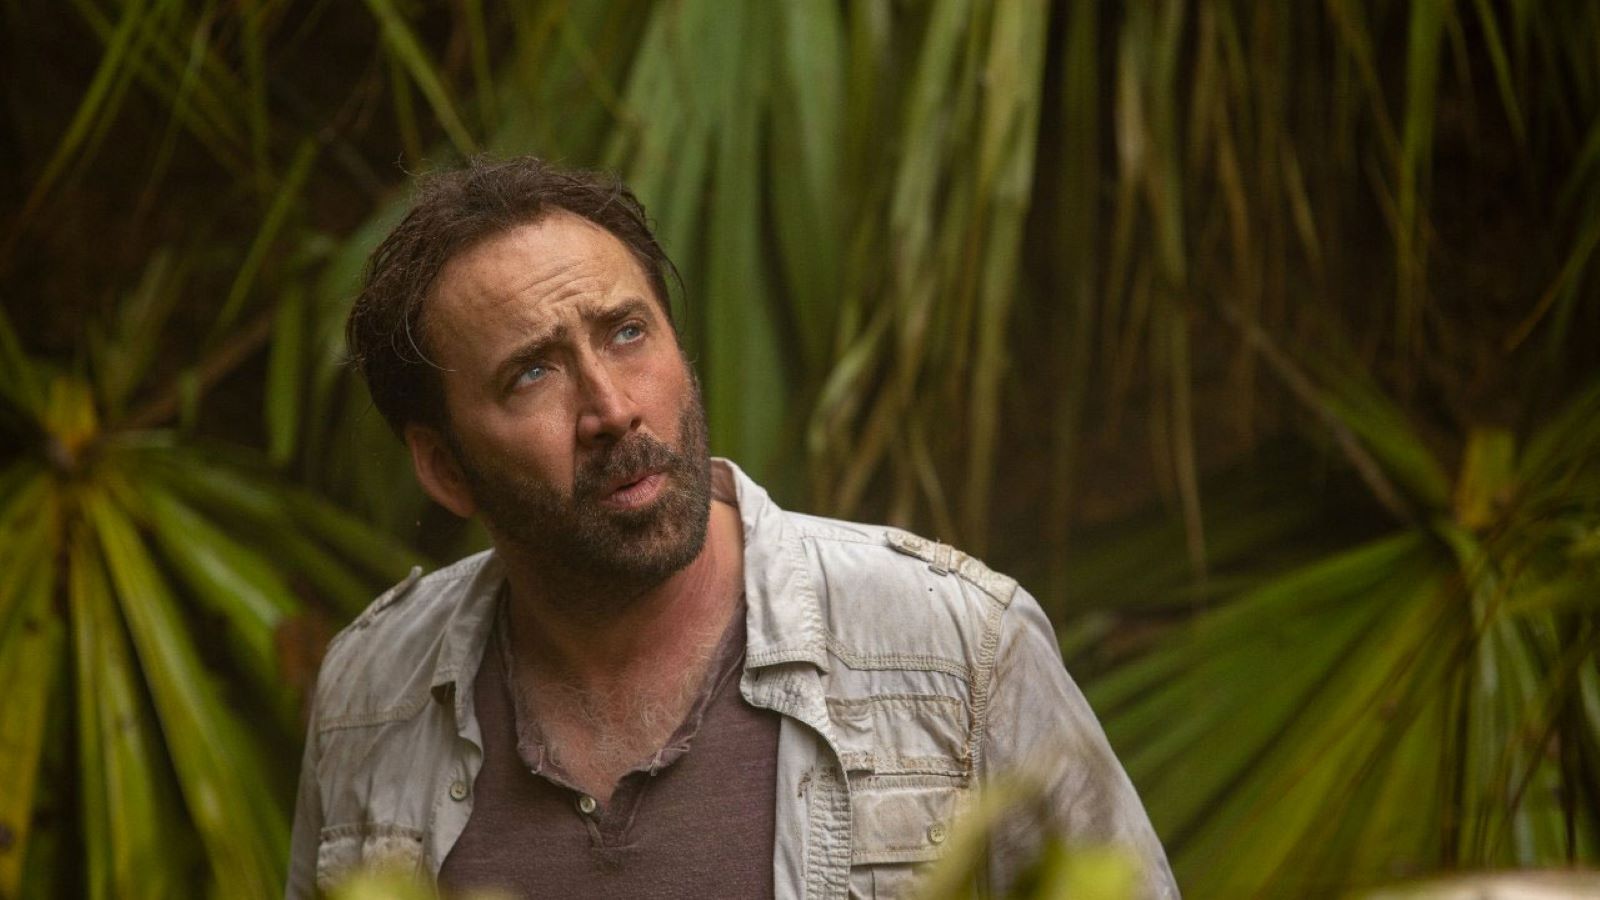 Primal: trama del film con Nicolas Cage stasera su Rai 4, sabato 28 ottobre